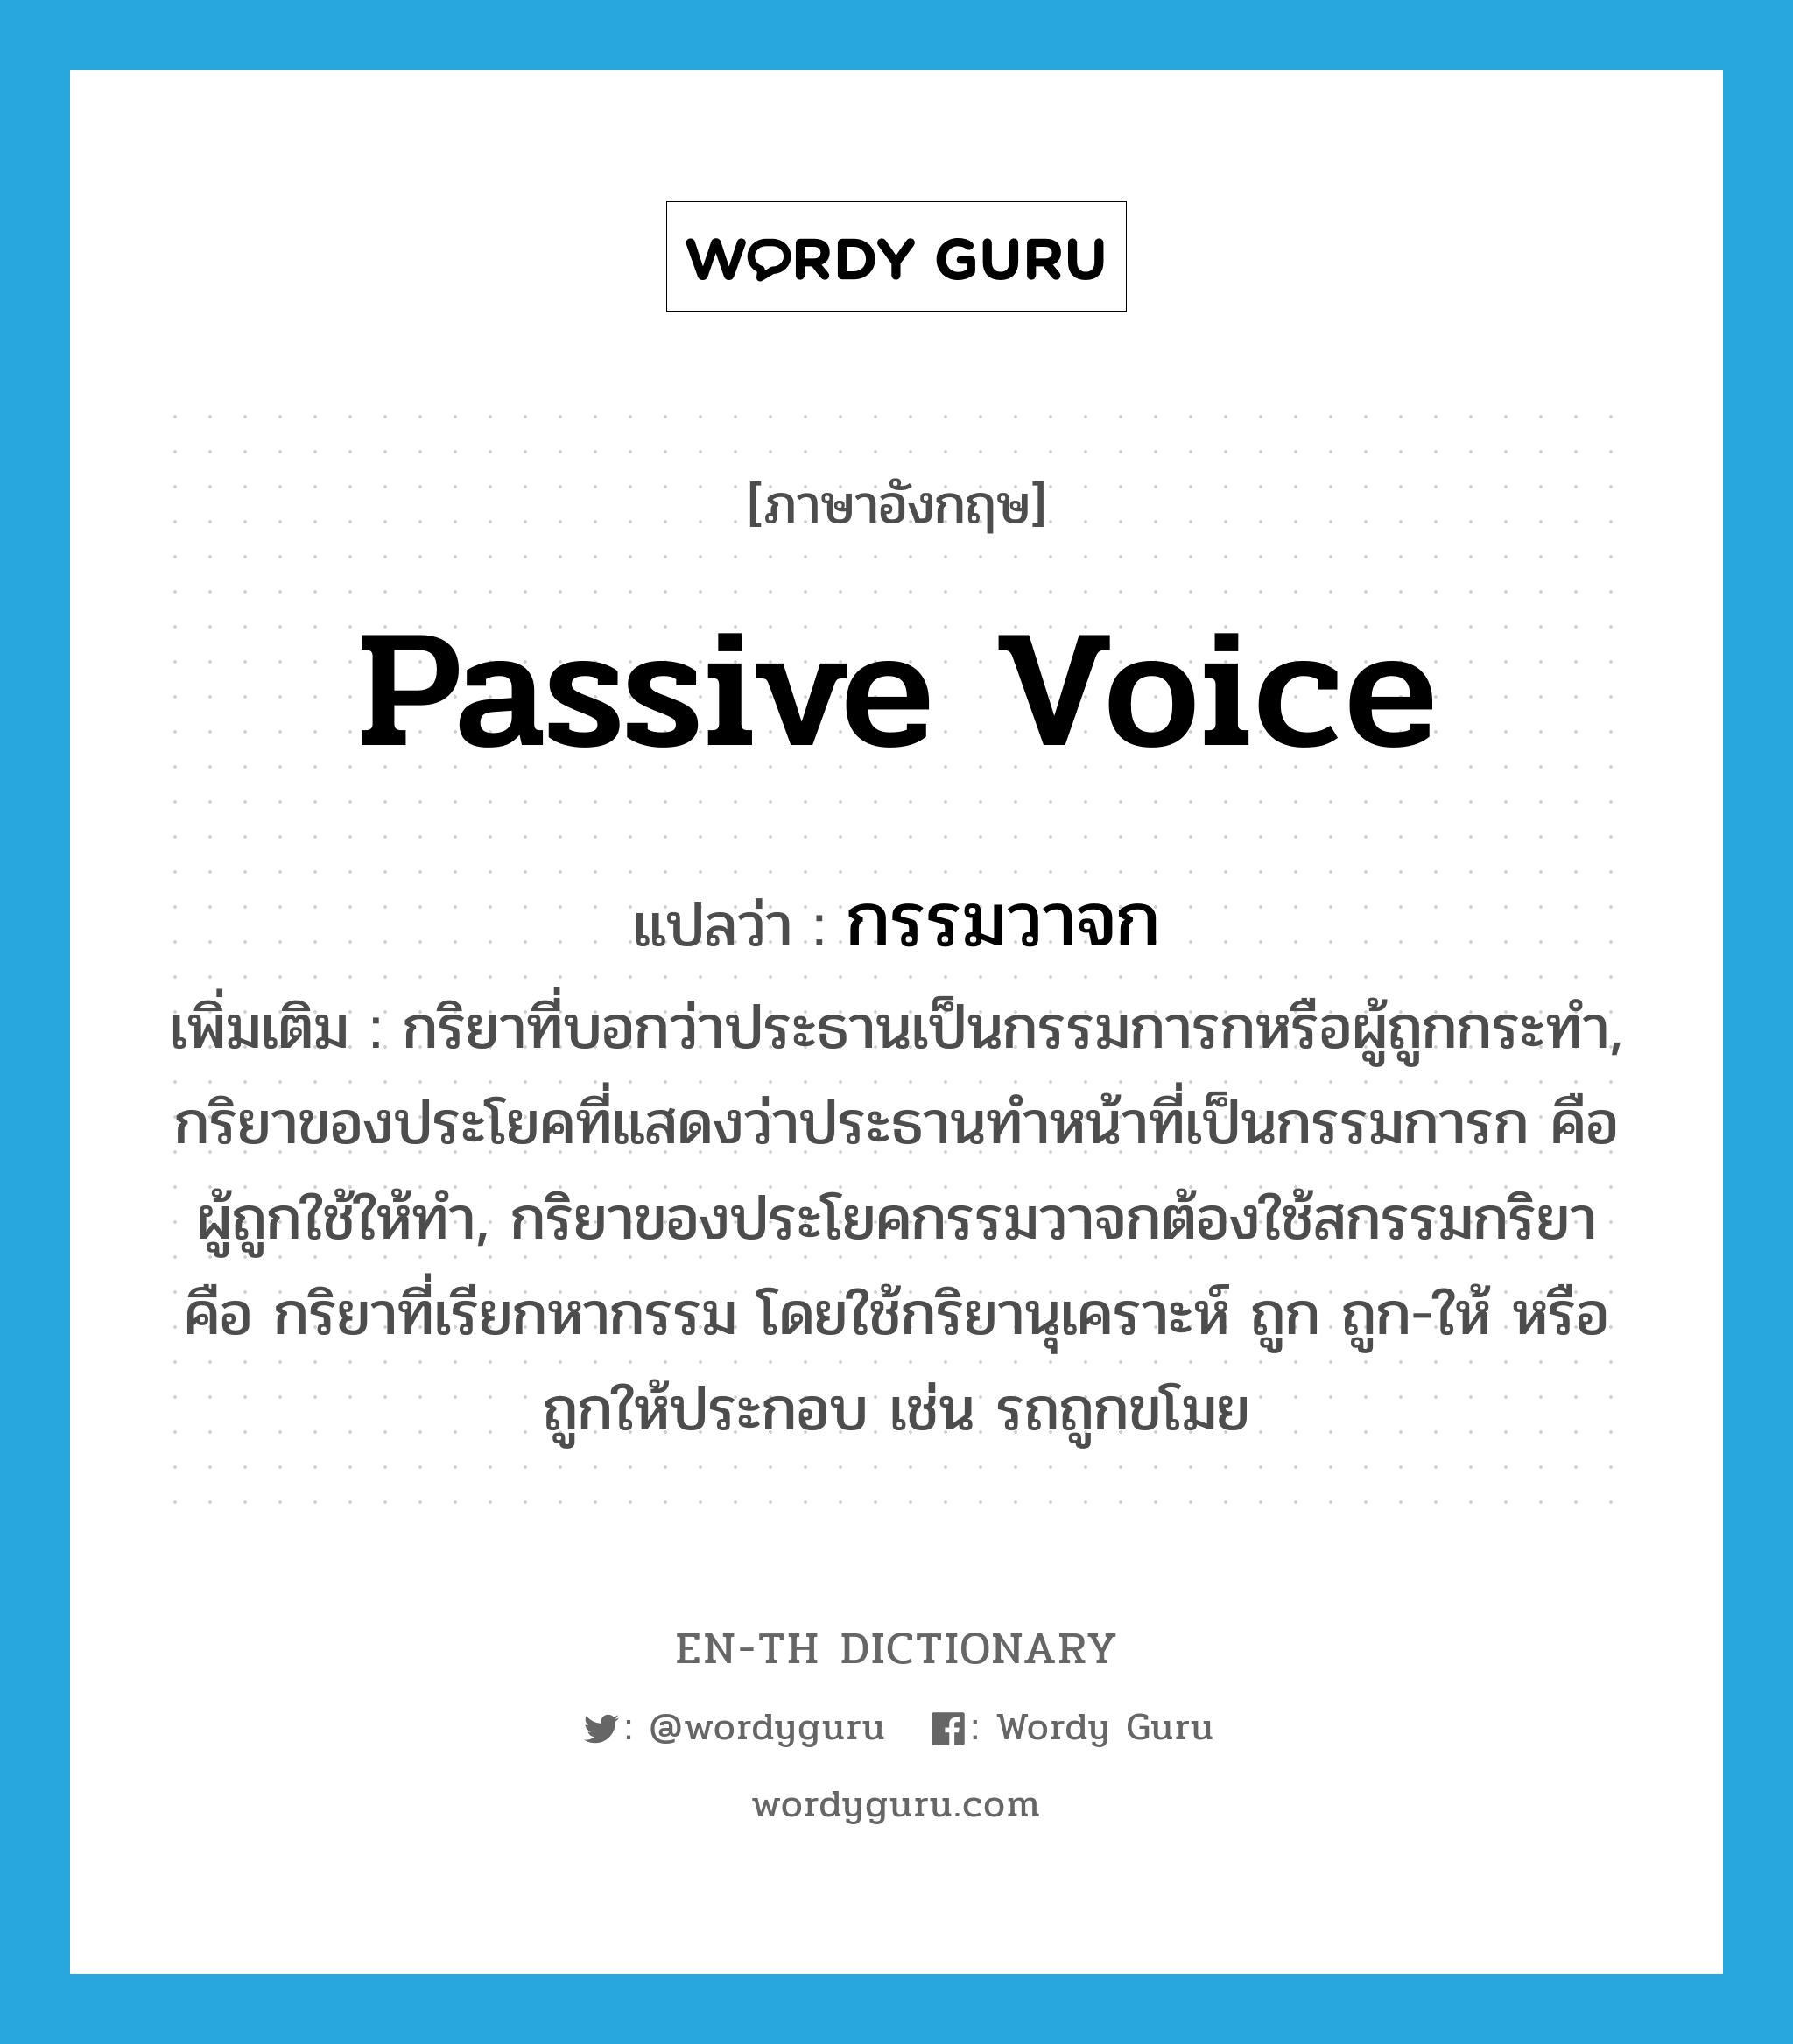 passive voice แปลว่า?, คำศัพท์ภาษาอังกฤษ passive voice แปลว่า กรรมวาจก ประเภท N เพิ่มเติม กริยาที่บอกว่าประธานเป็นกรรมการกหรือผู้ถูกกระทำ, กริยาของประโยคที่แสดงว่าประธานทำหน้าที่เป็นกรรมการก คือผู้ถูกใช้ให้ทำ, กริยาของประโยคกรรมวาจกต้องใช้สกรรมกริยา คือ กริยาที่เรียกหากรรม โดยใช้กริยานุเคราะห์ ถูก ถูก-ให้ หรือถูกให้ประกอบ เช่น รถถูกขโมย หมวด N